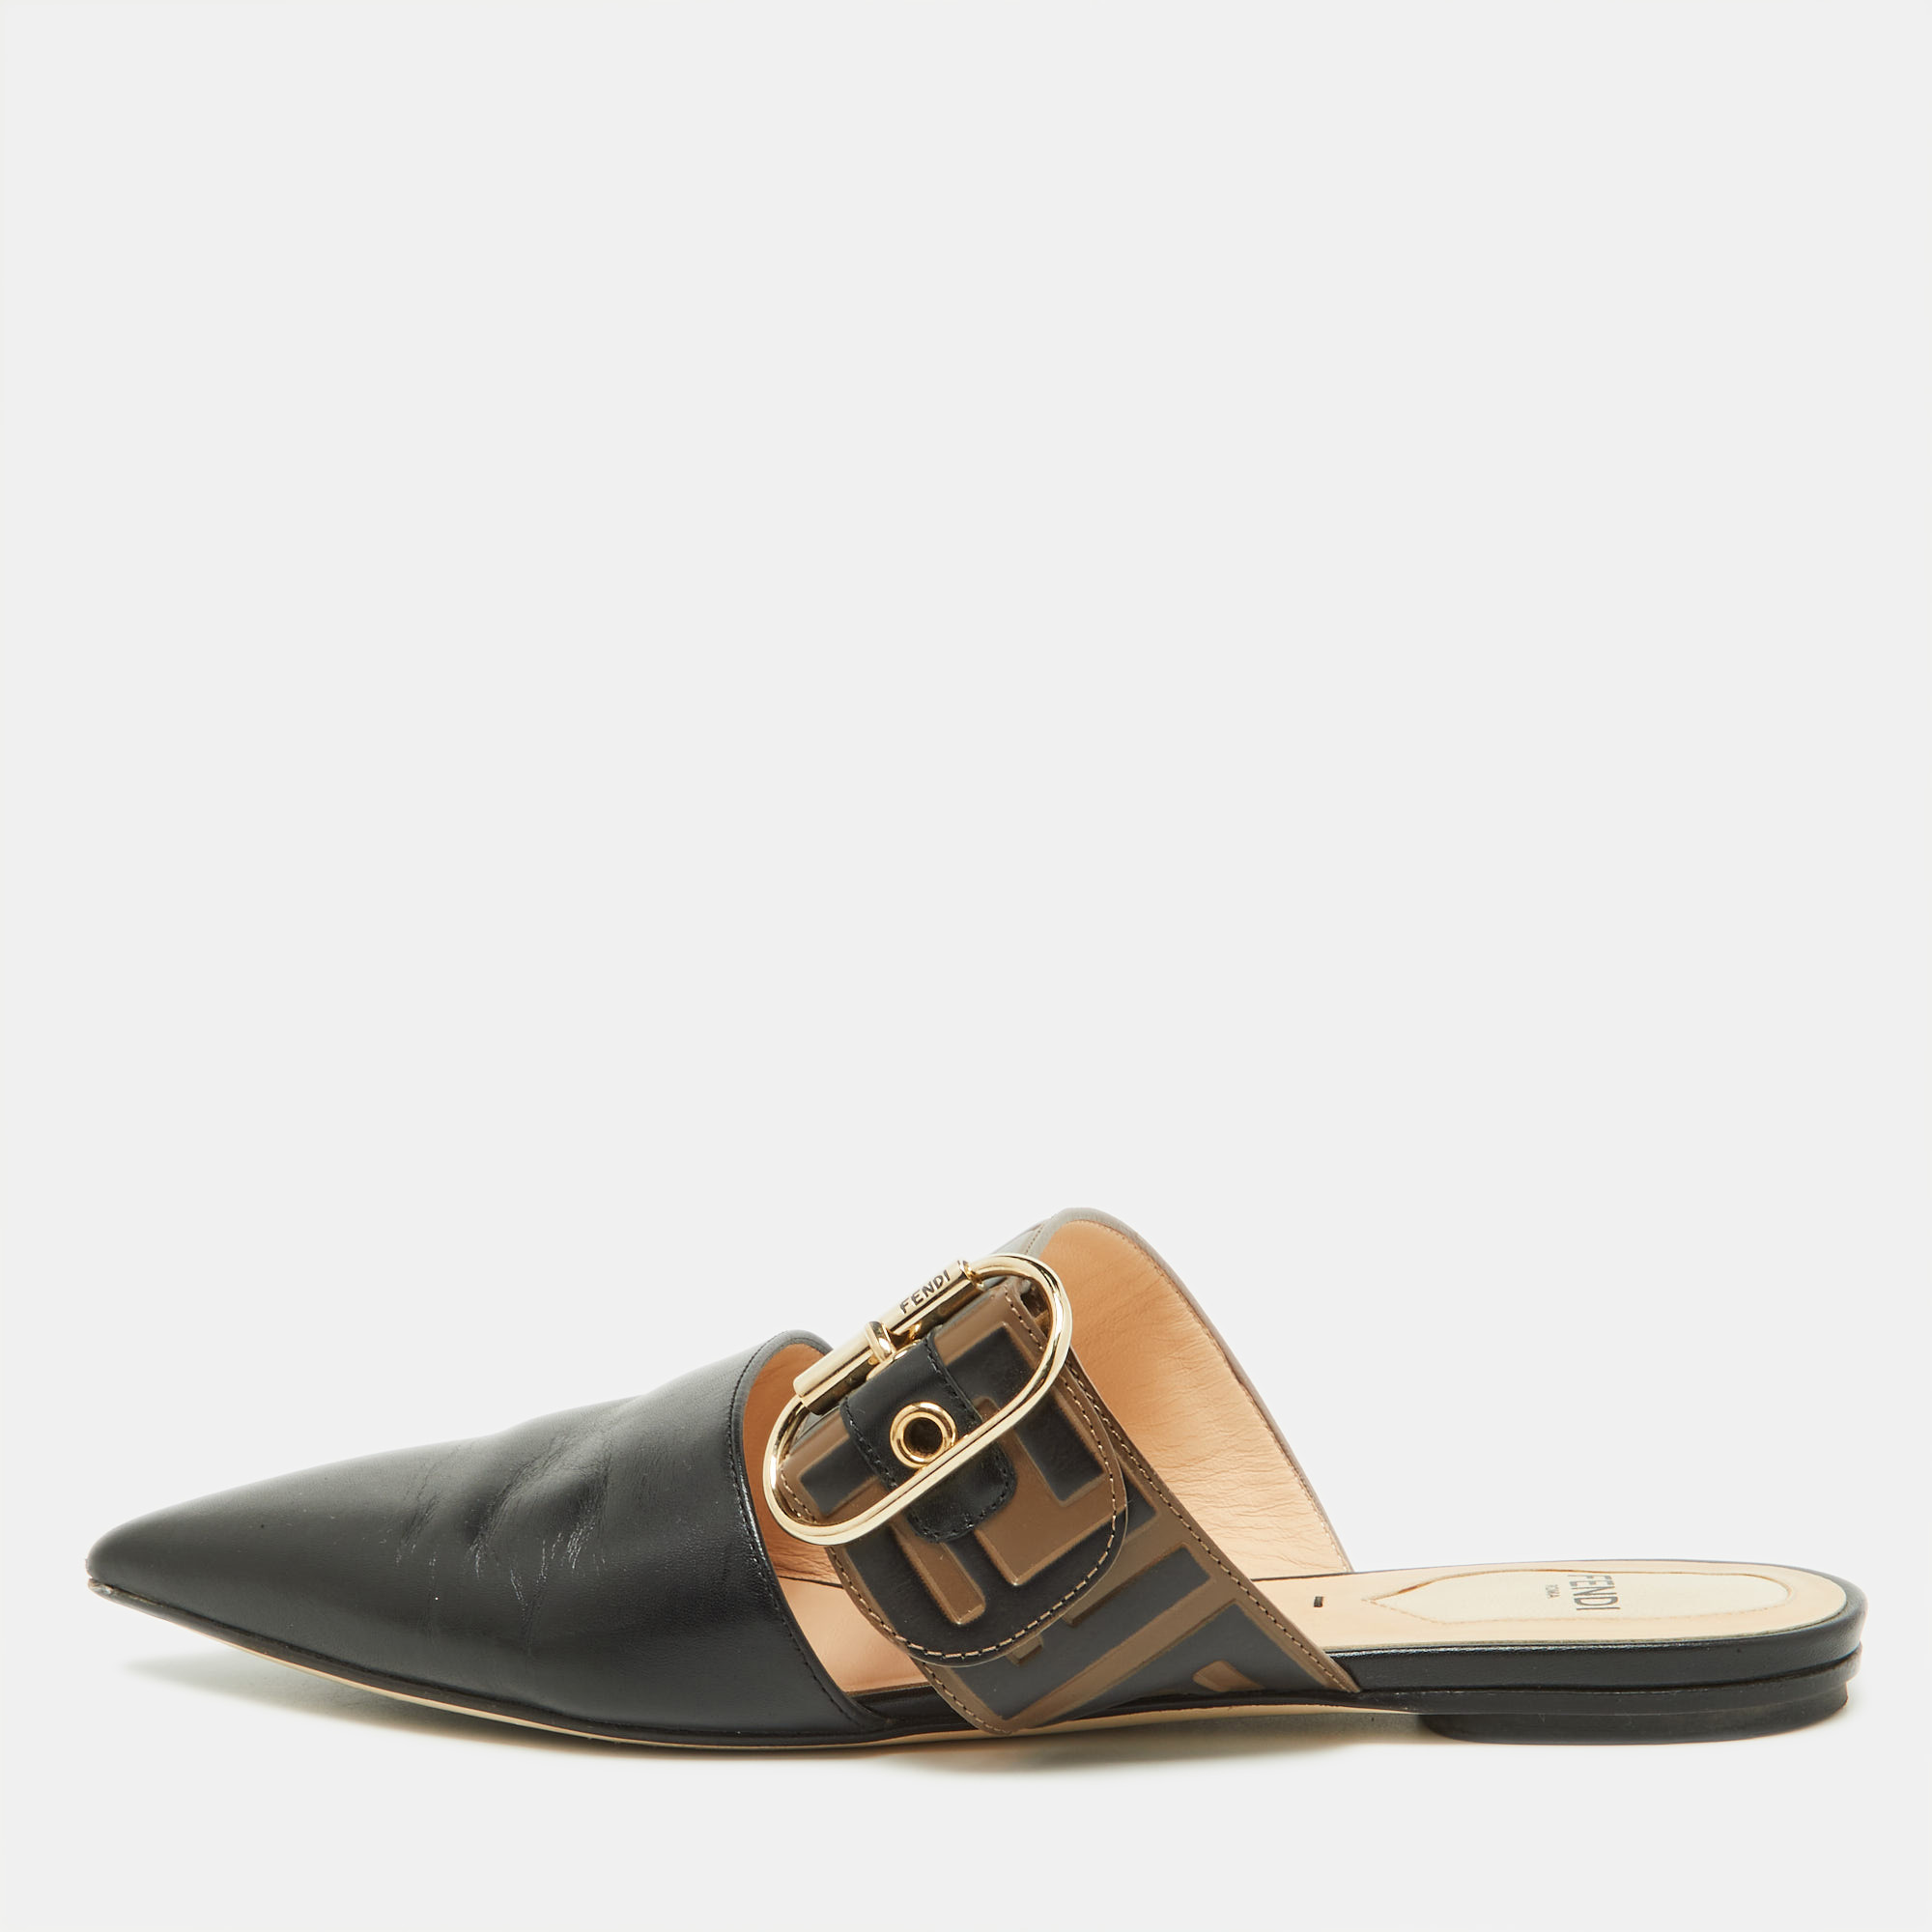 Pre-owned Fendi Black/tobacco Zucca Leather Flat Mule Sandals Size 37